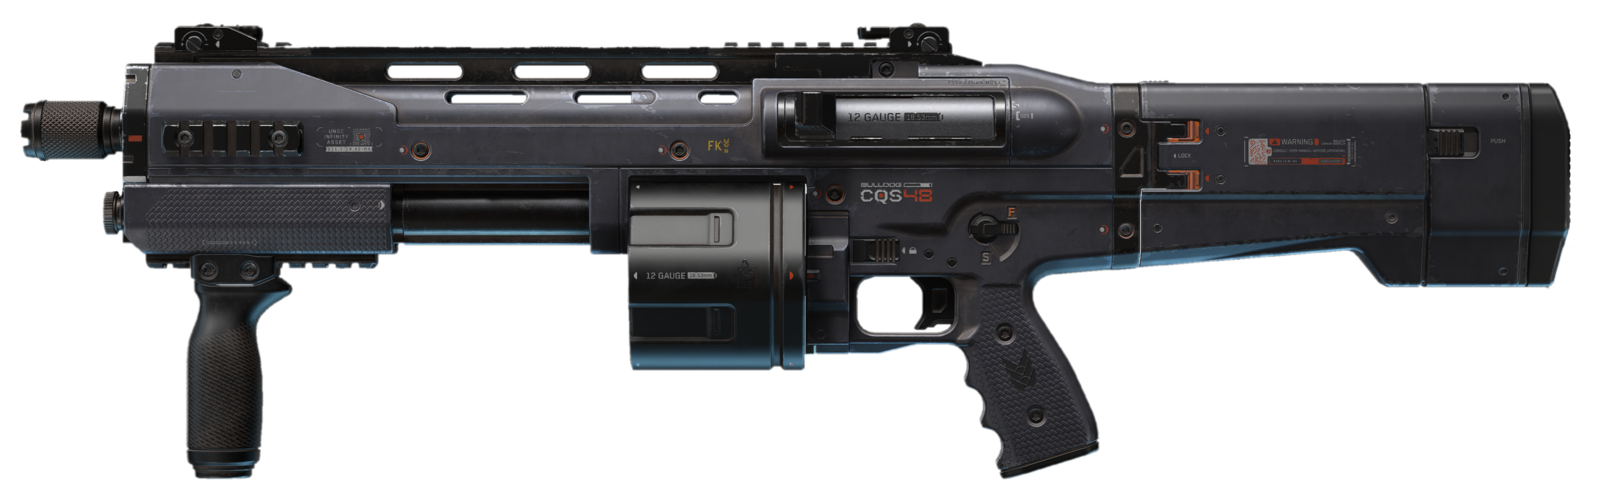 【HALO设定科普】CQS-48斗牛犬战术霰弹枪